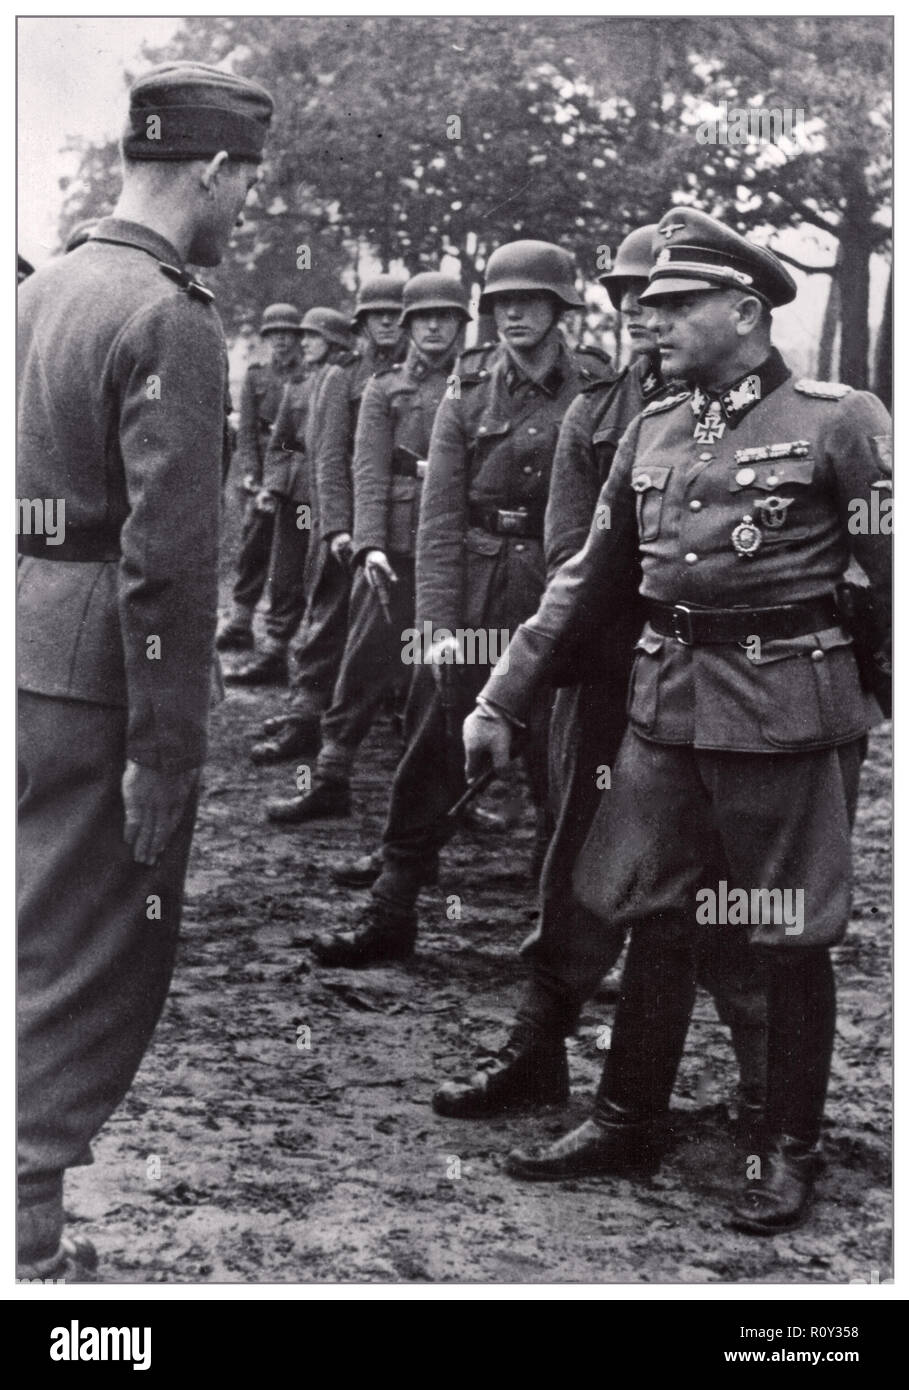 WW2 'Sepp Dietrich' Oberst-Gruppenführer Waffen SS ( found guilty of war crimes at Nuremberg trials)  training a motley bunch of young German Wehrmacht troops 1943 Stock Photo